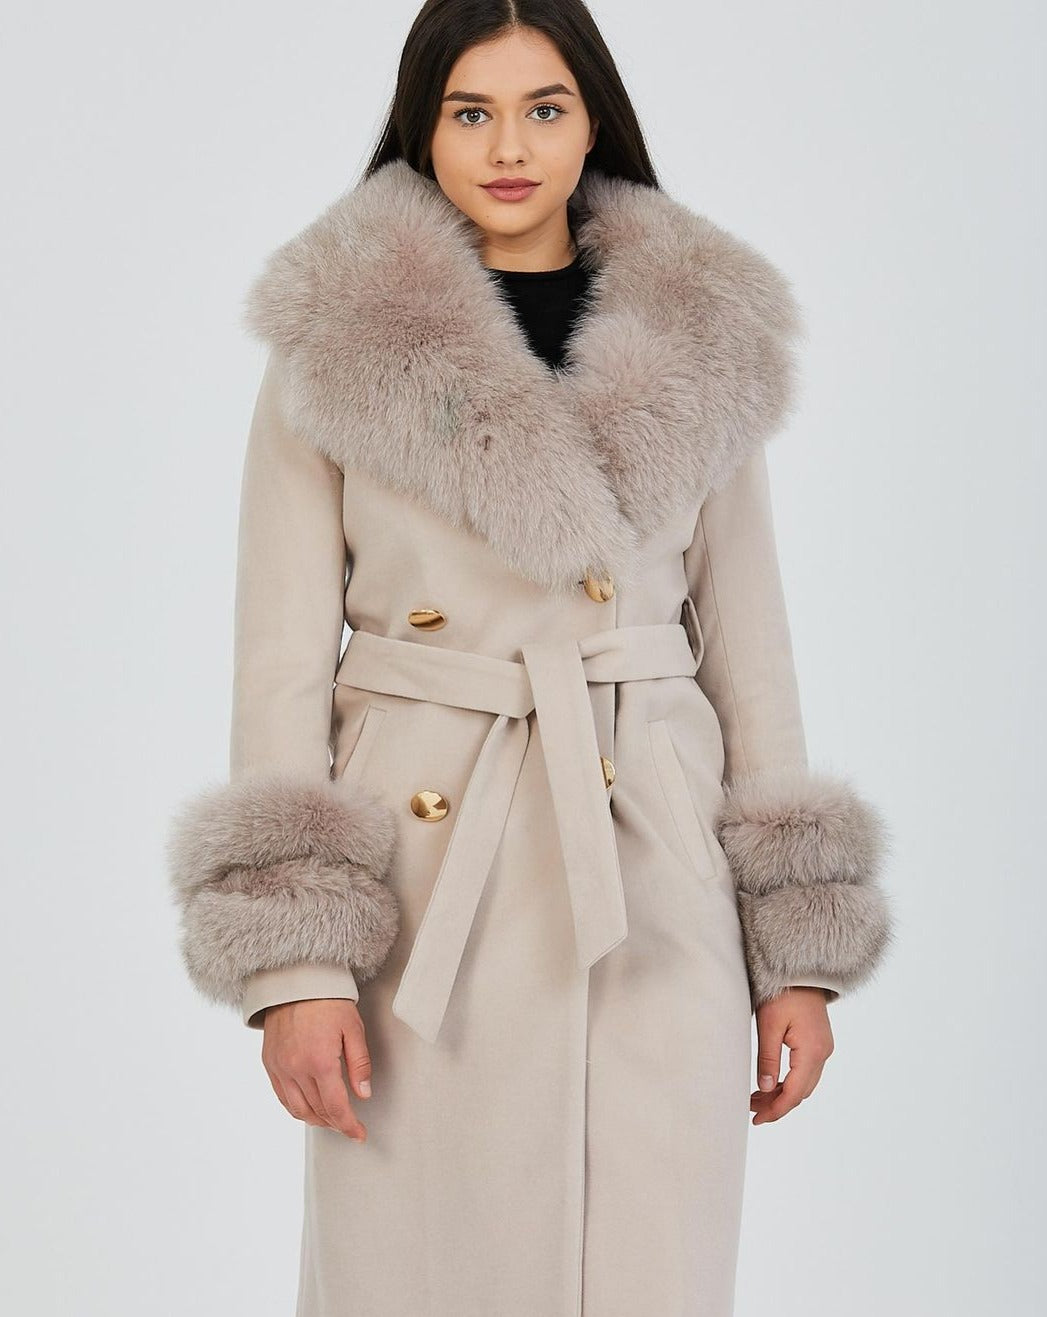 Elegant GLORIA BEIGE Coat with Luxurious Fox Fur Collar and Cuffs